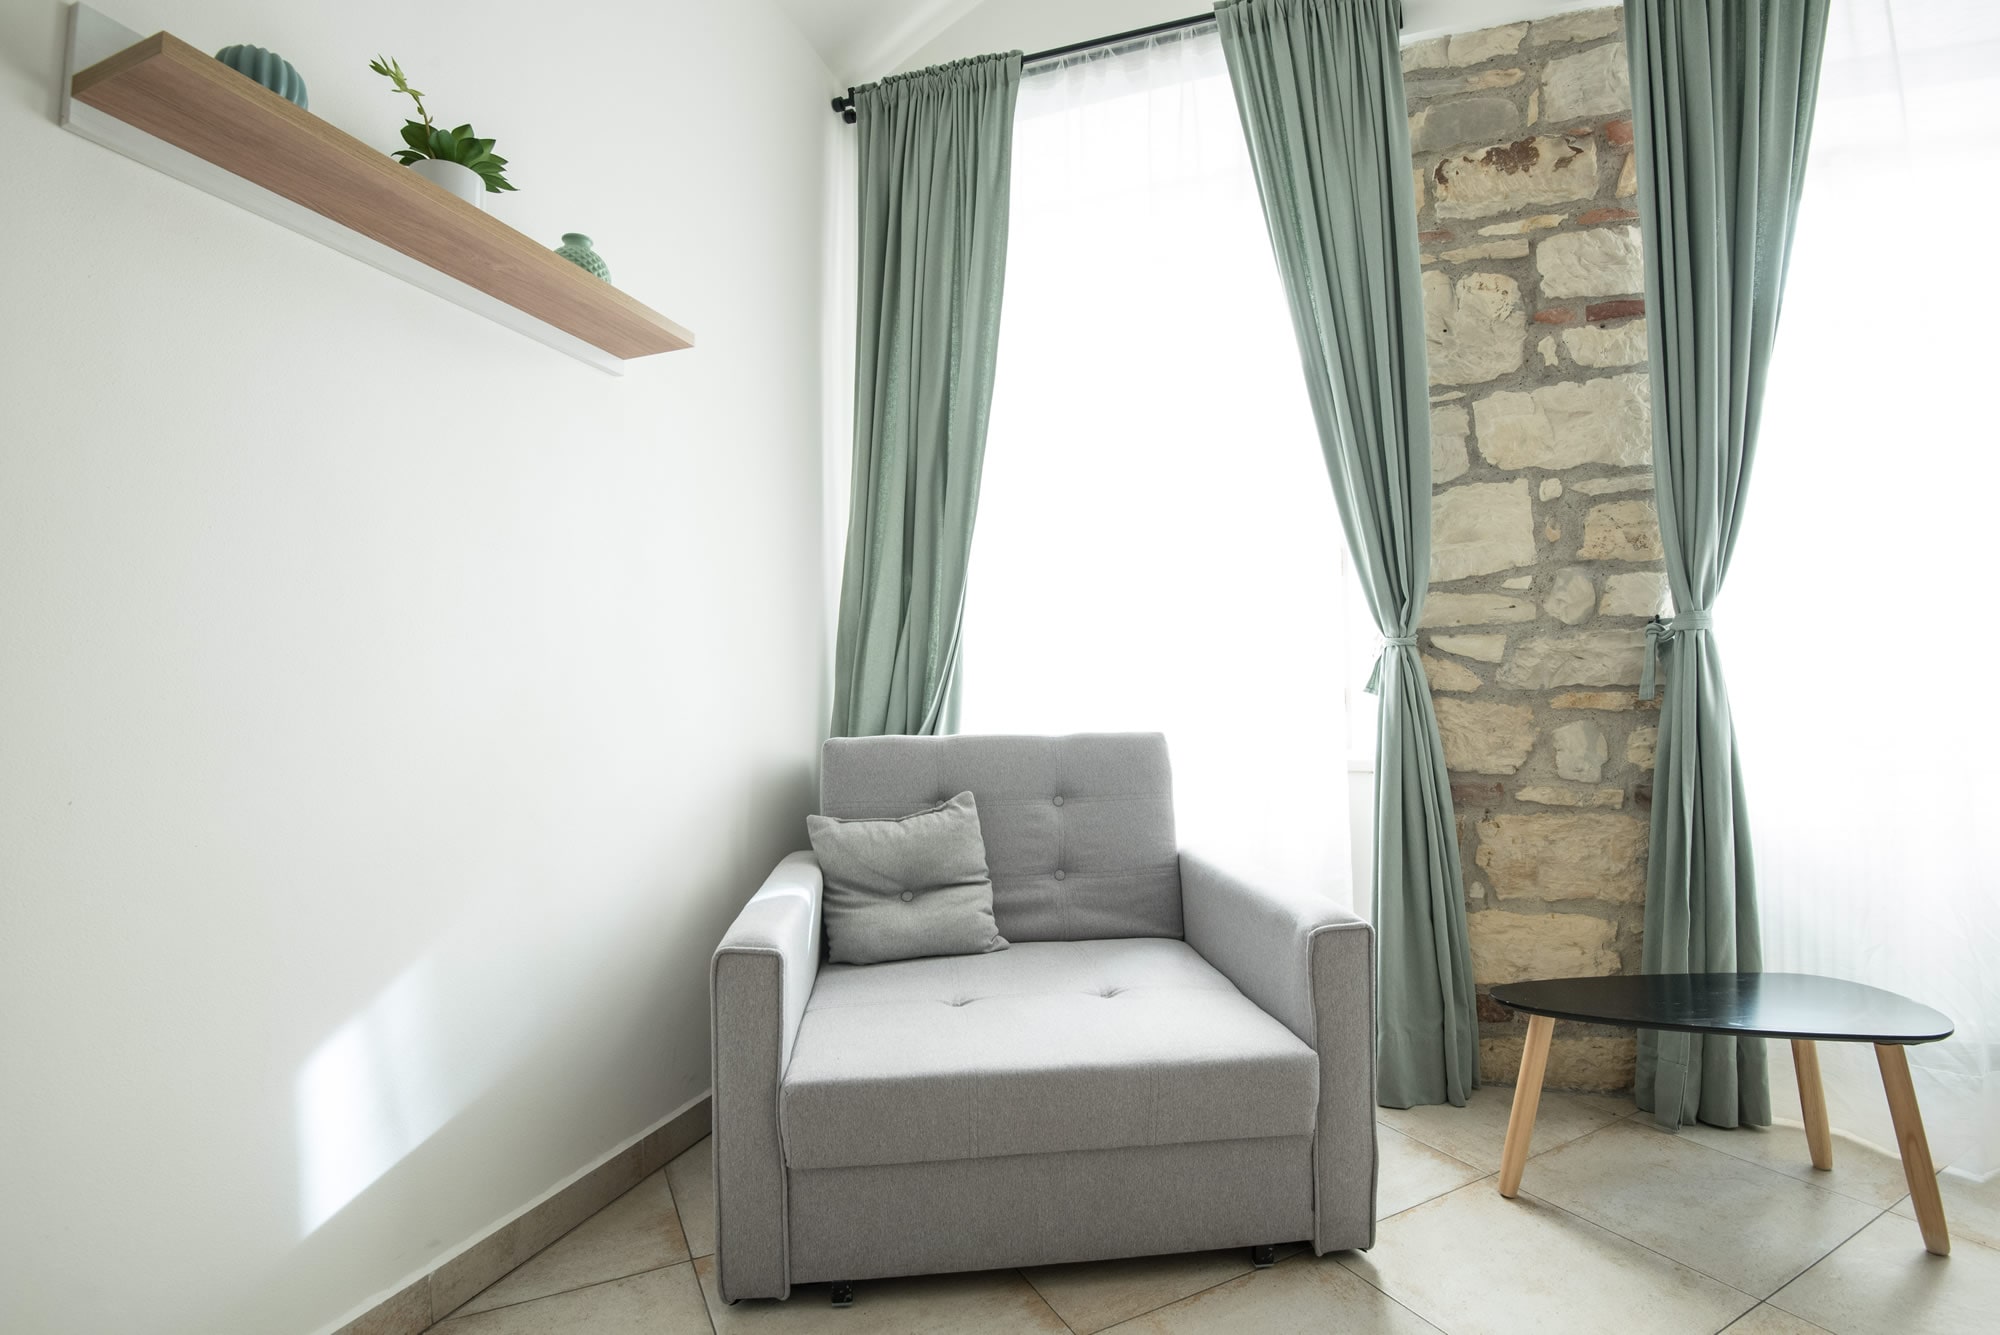 Sofa chair near large window and stone wall